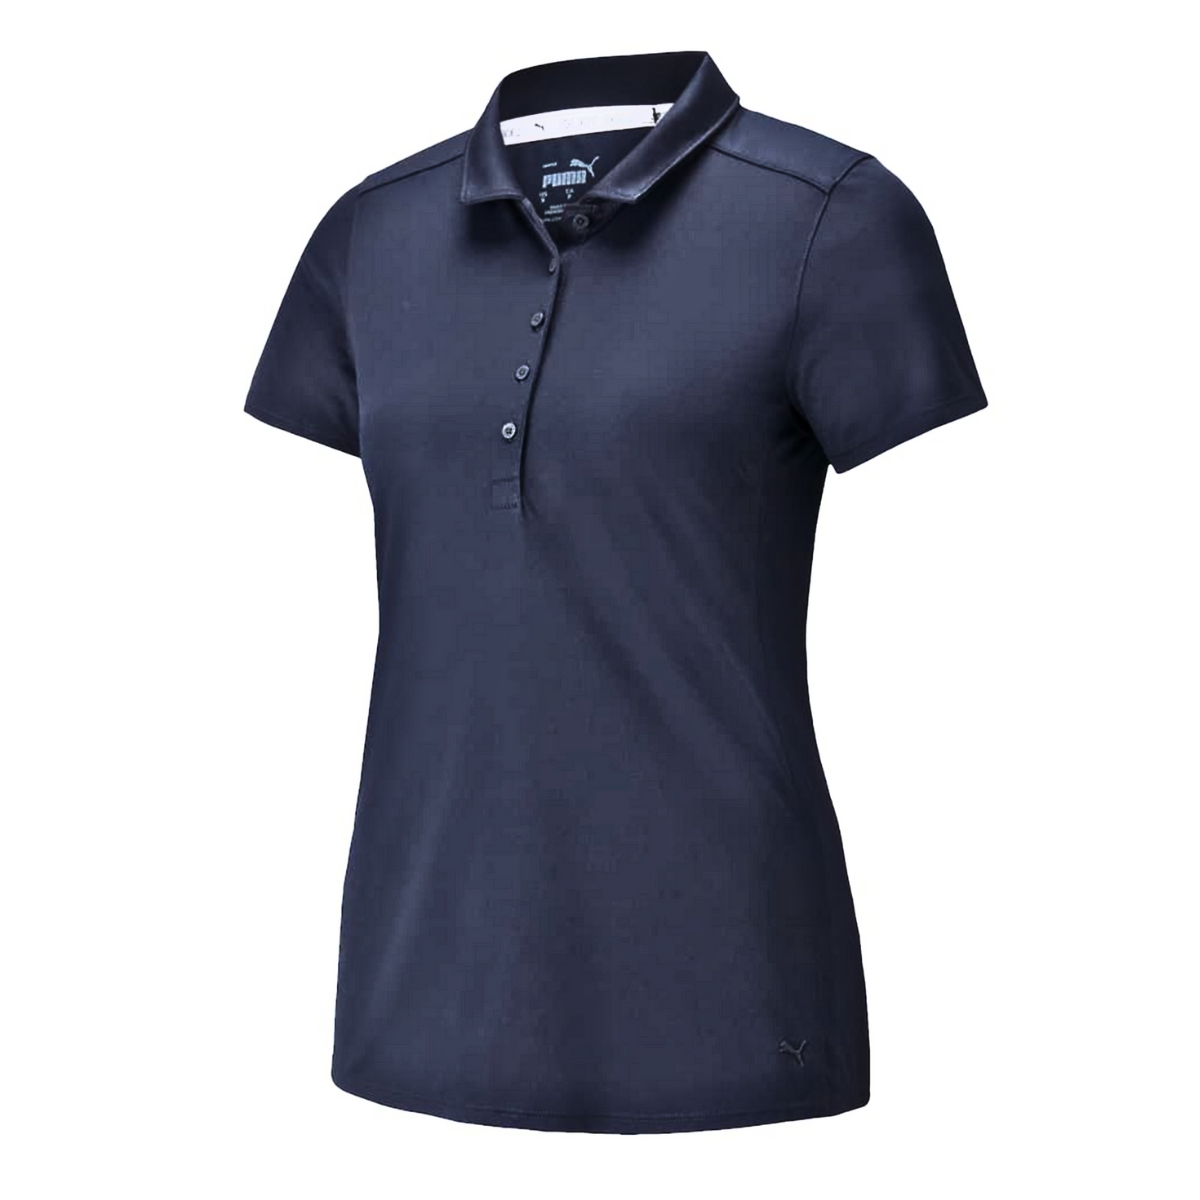 Puma Women's Gamer Golf Polo T-Shirt (US Size)